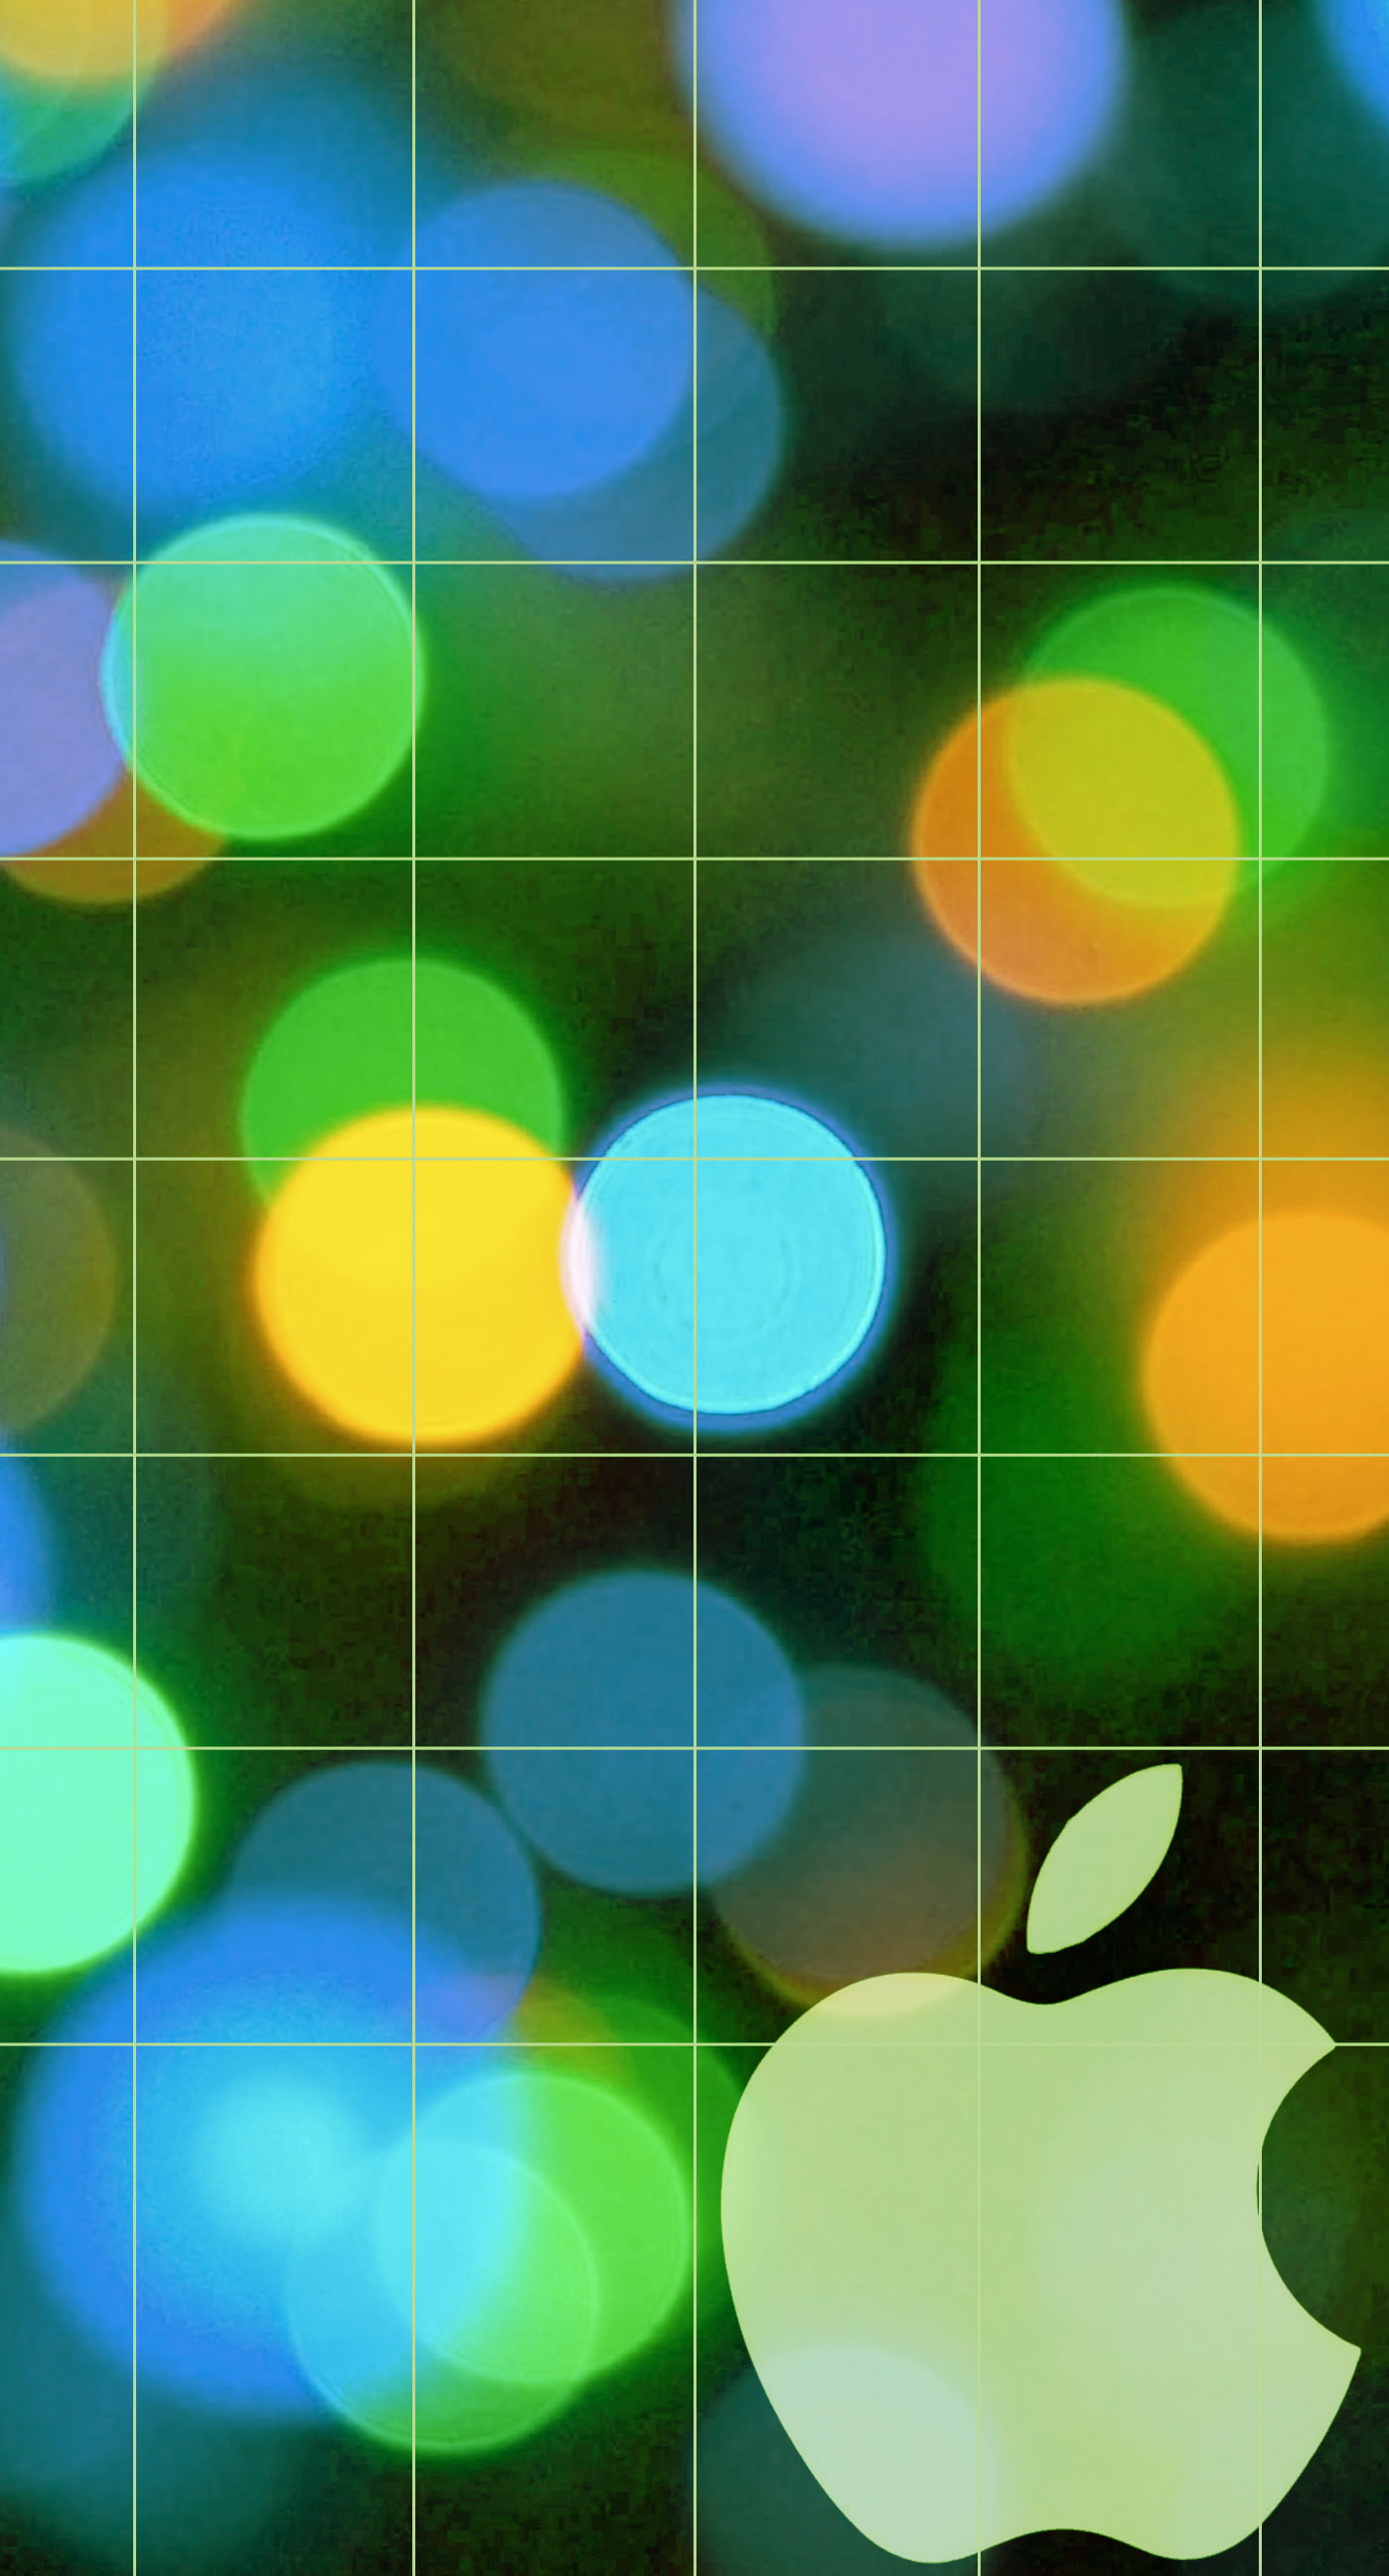  Logo Apple rak keren hijau wallpaper sc iPhone7Plus